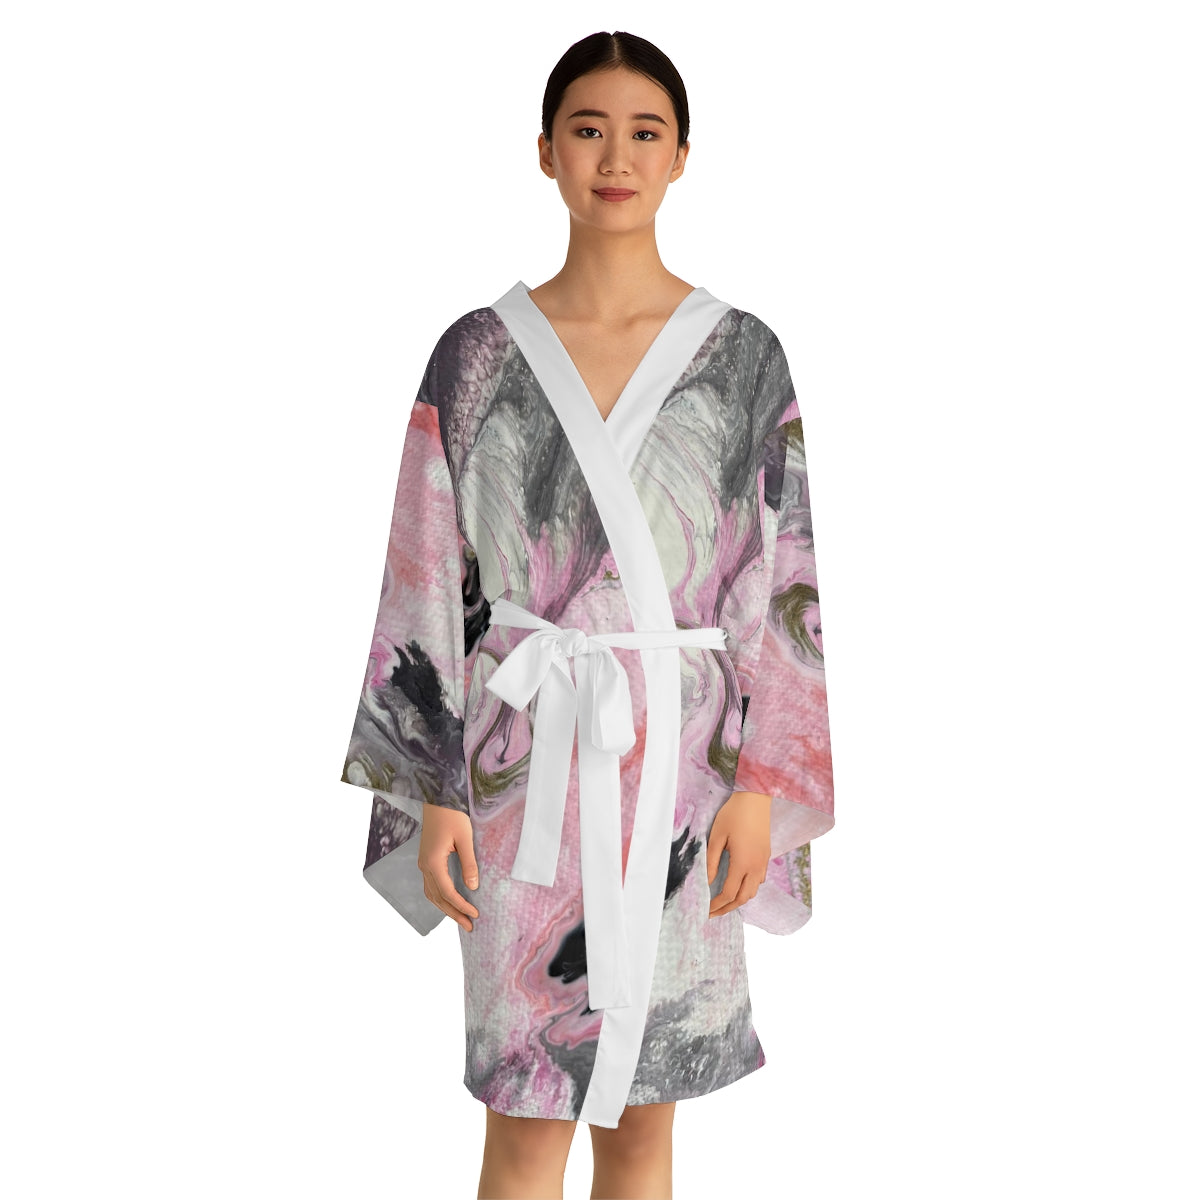 Long Sleeve Kimono Robe - Dusky pink and grey design